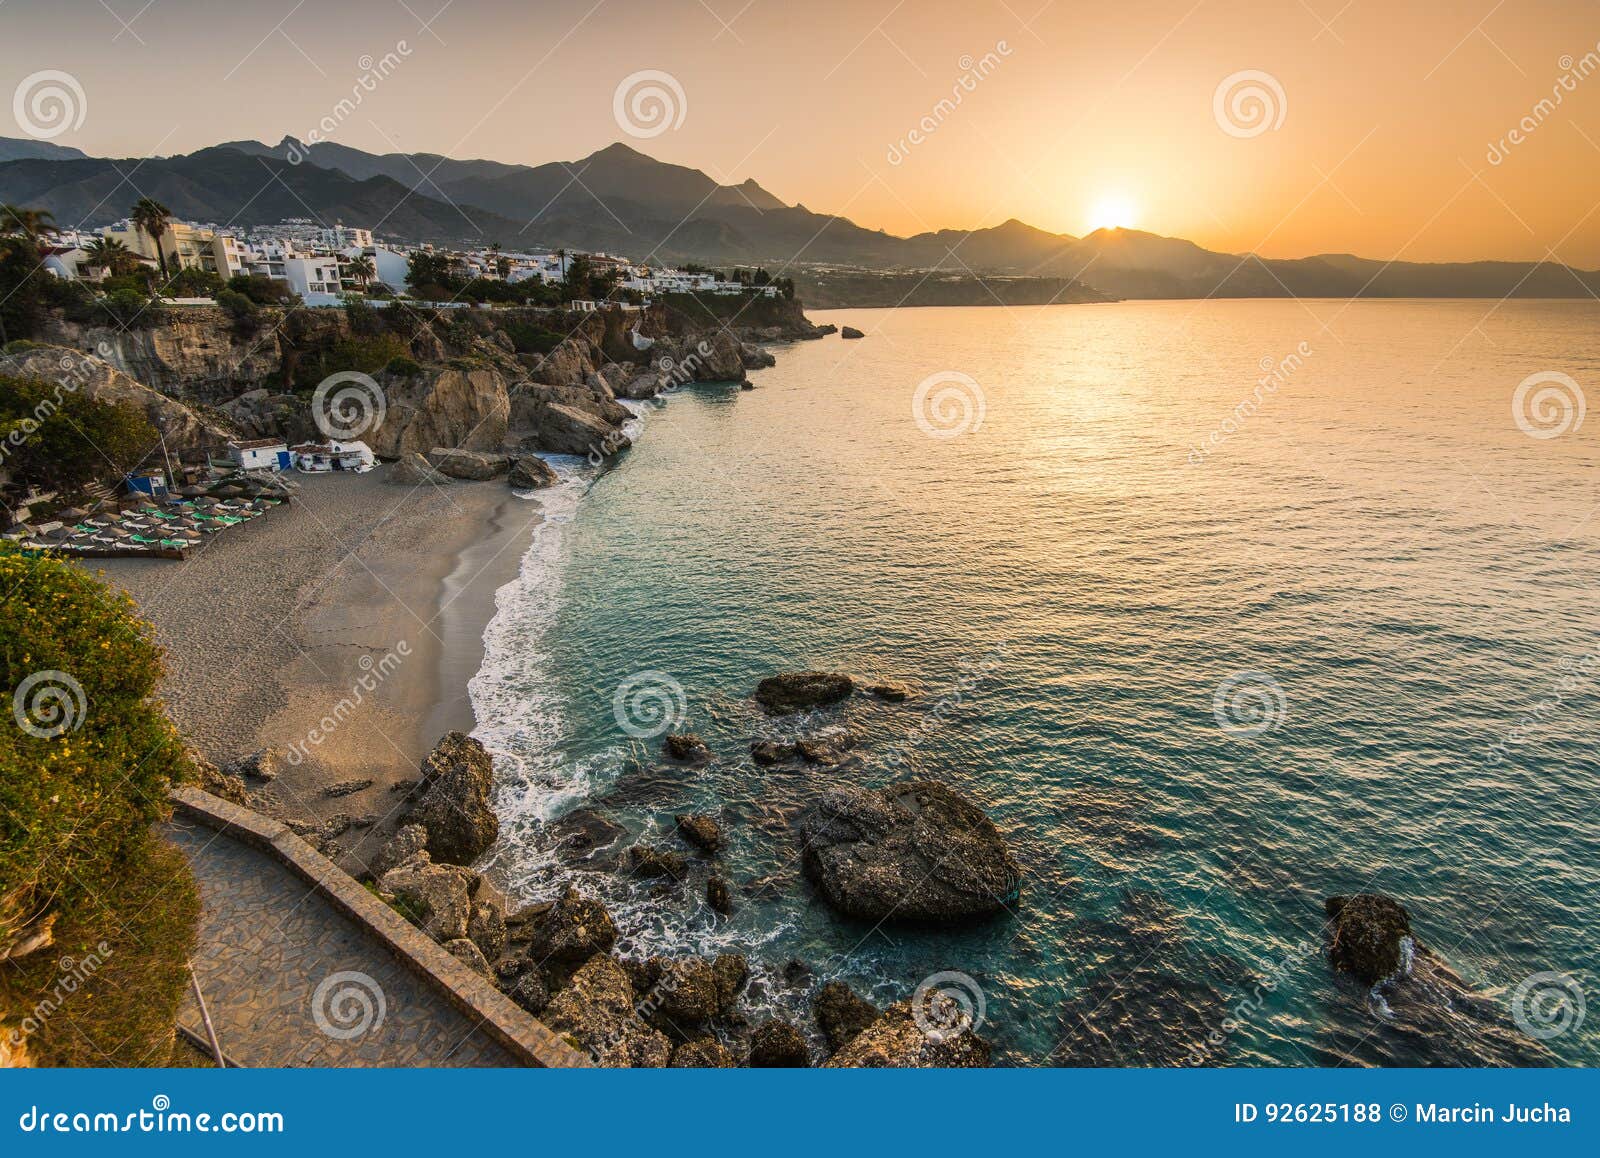 beautiful sunrise over beach in nerja,andalusia,spain